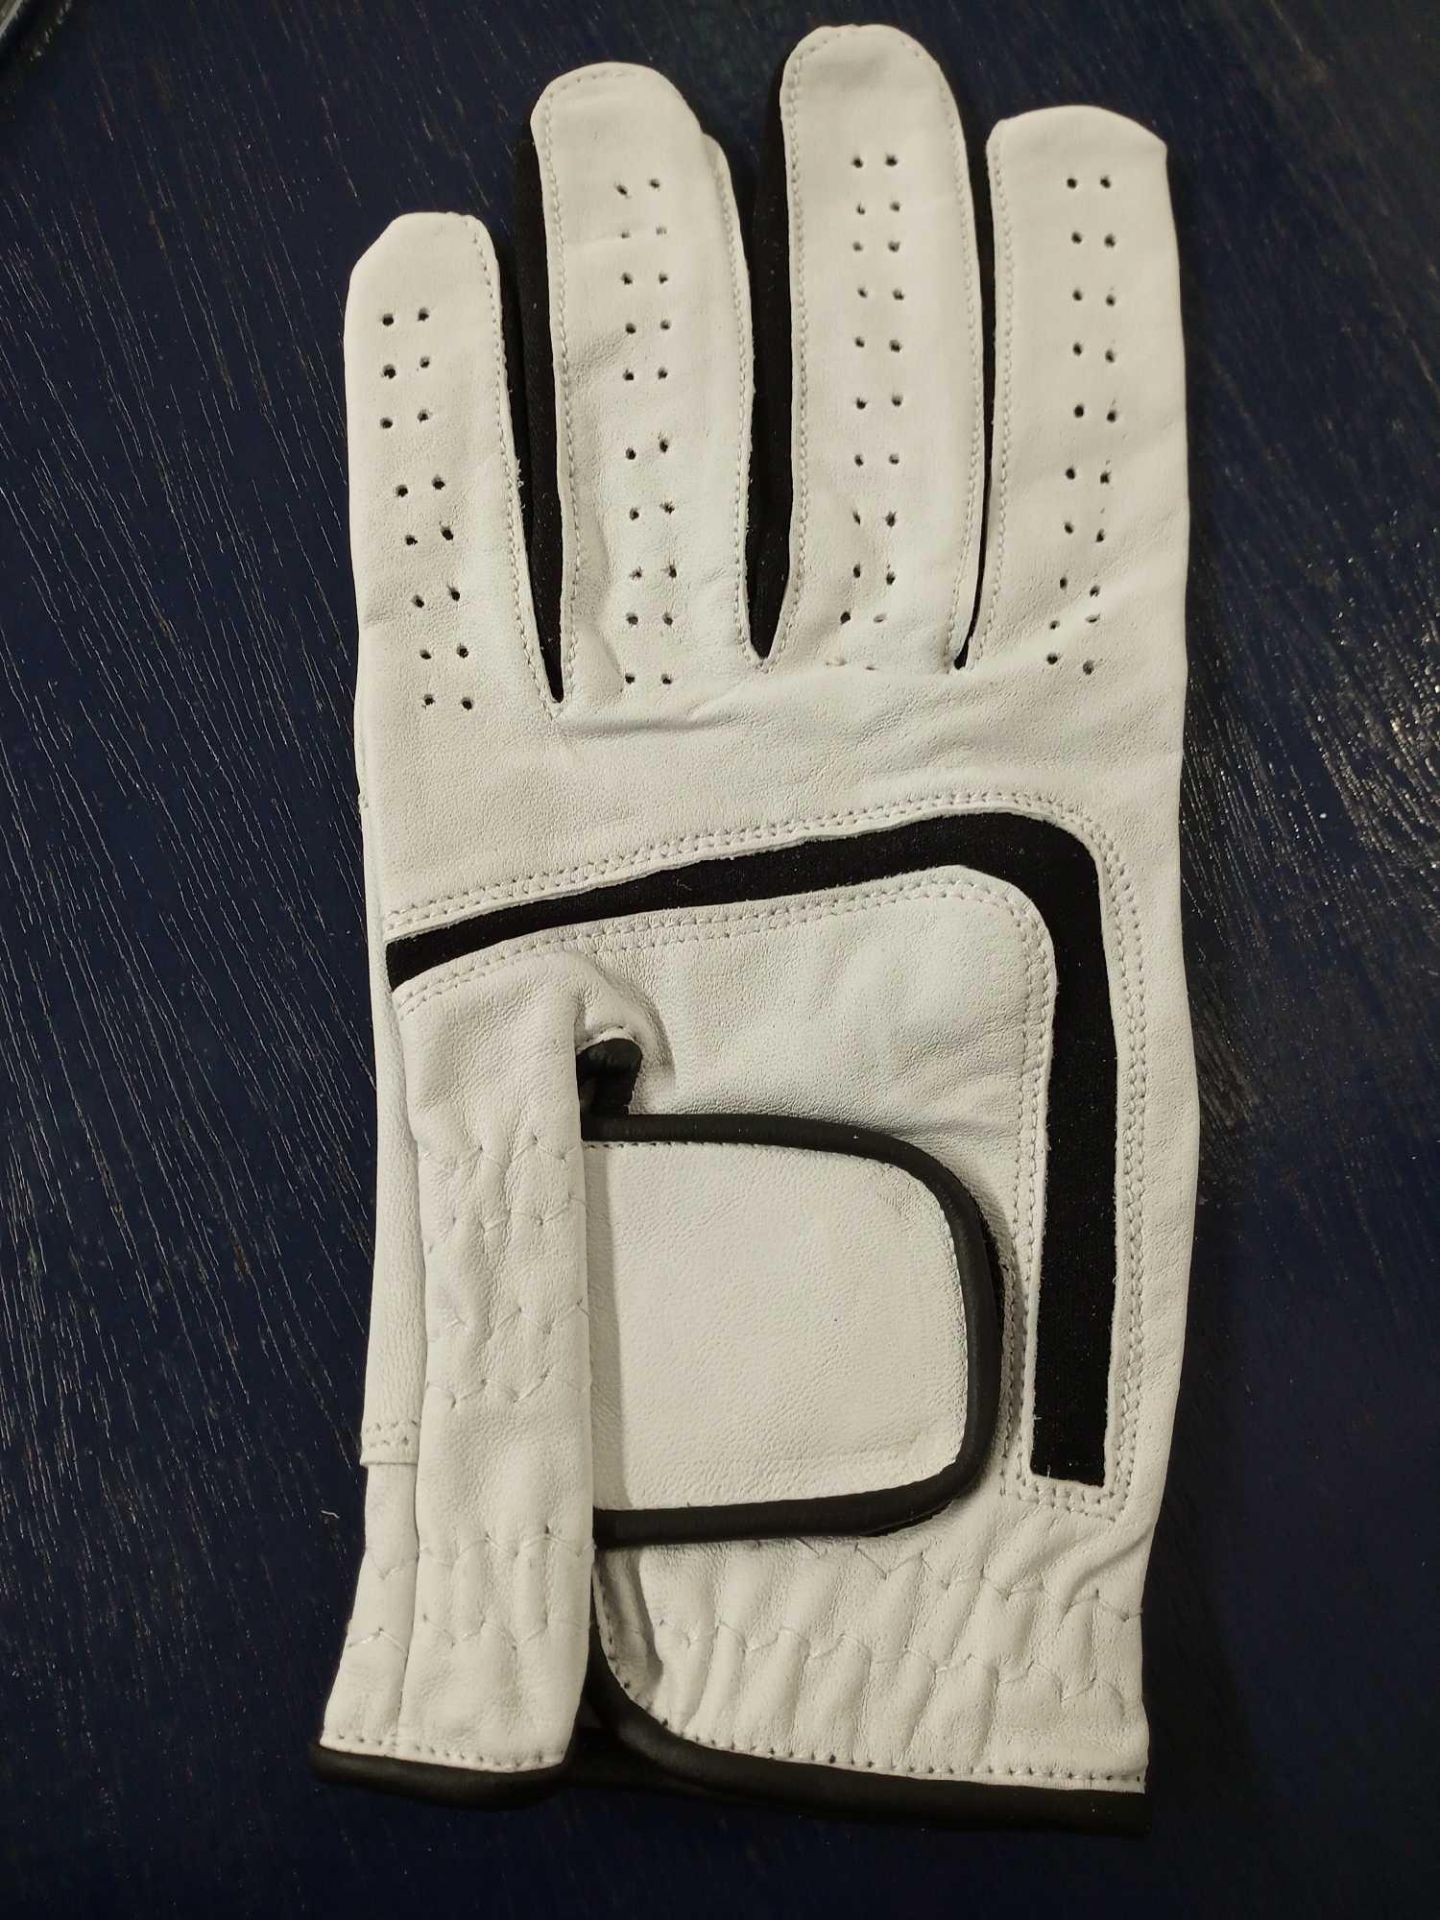 Leather White & Black Golf Glove Large - Image 2 of 2